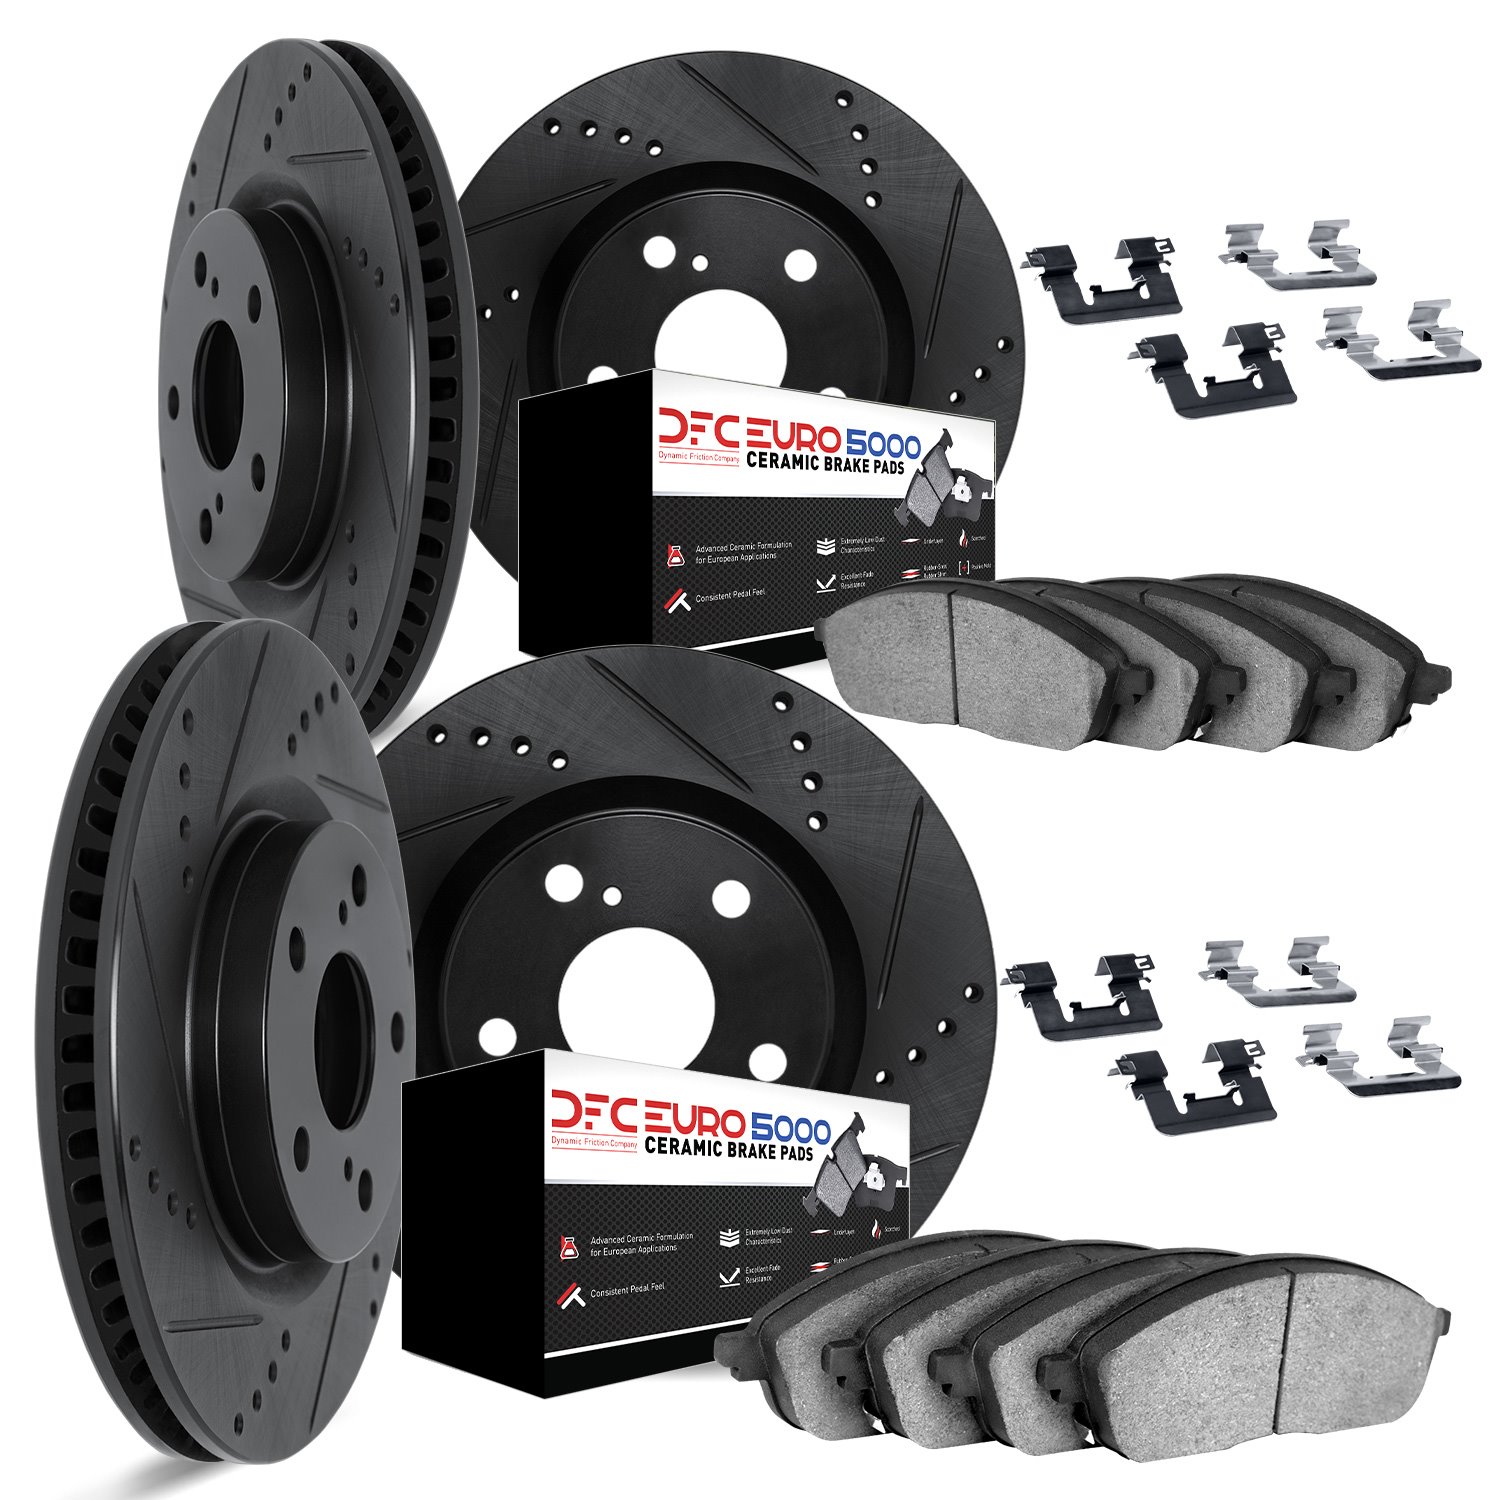 8614-31033 Drilled/Slotted Brake Rotors w/5000 Euro Ceramic Brake Pads Kit & Hardware [Black], 2013-2018 BMW, Position: Front an